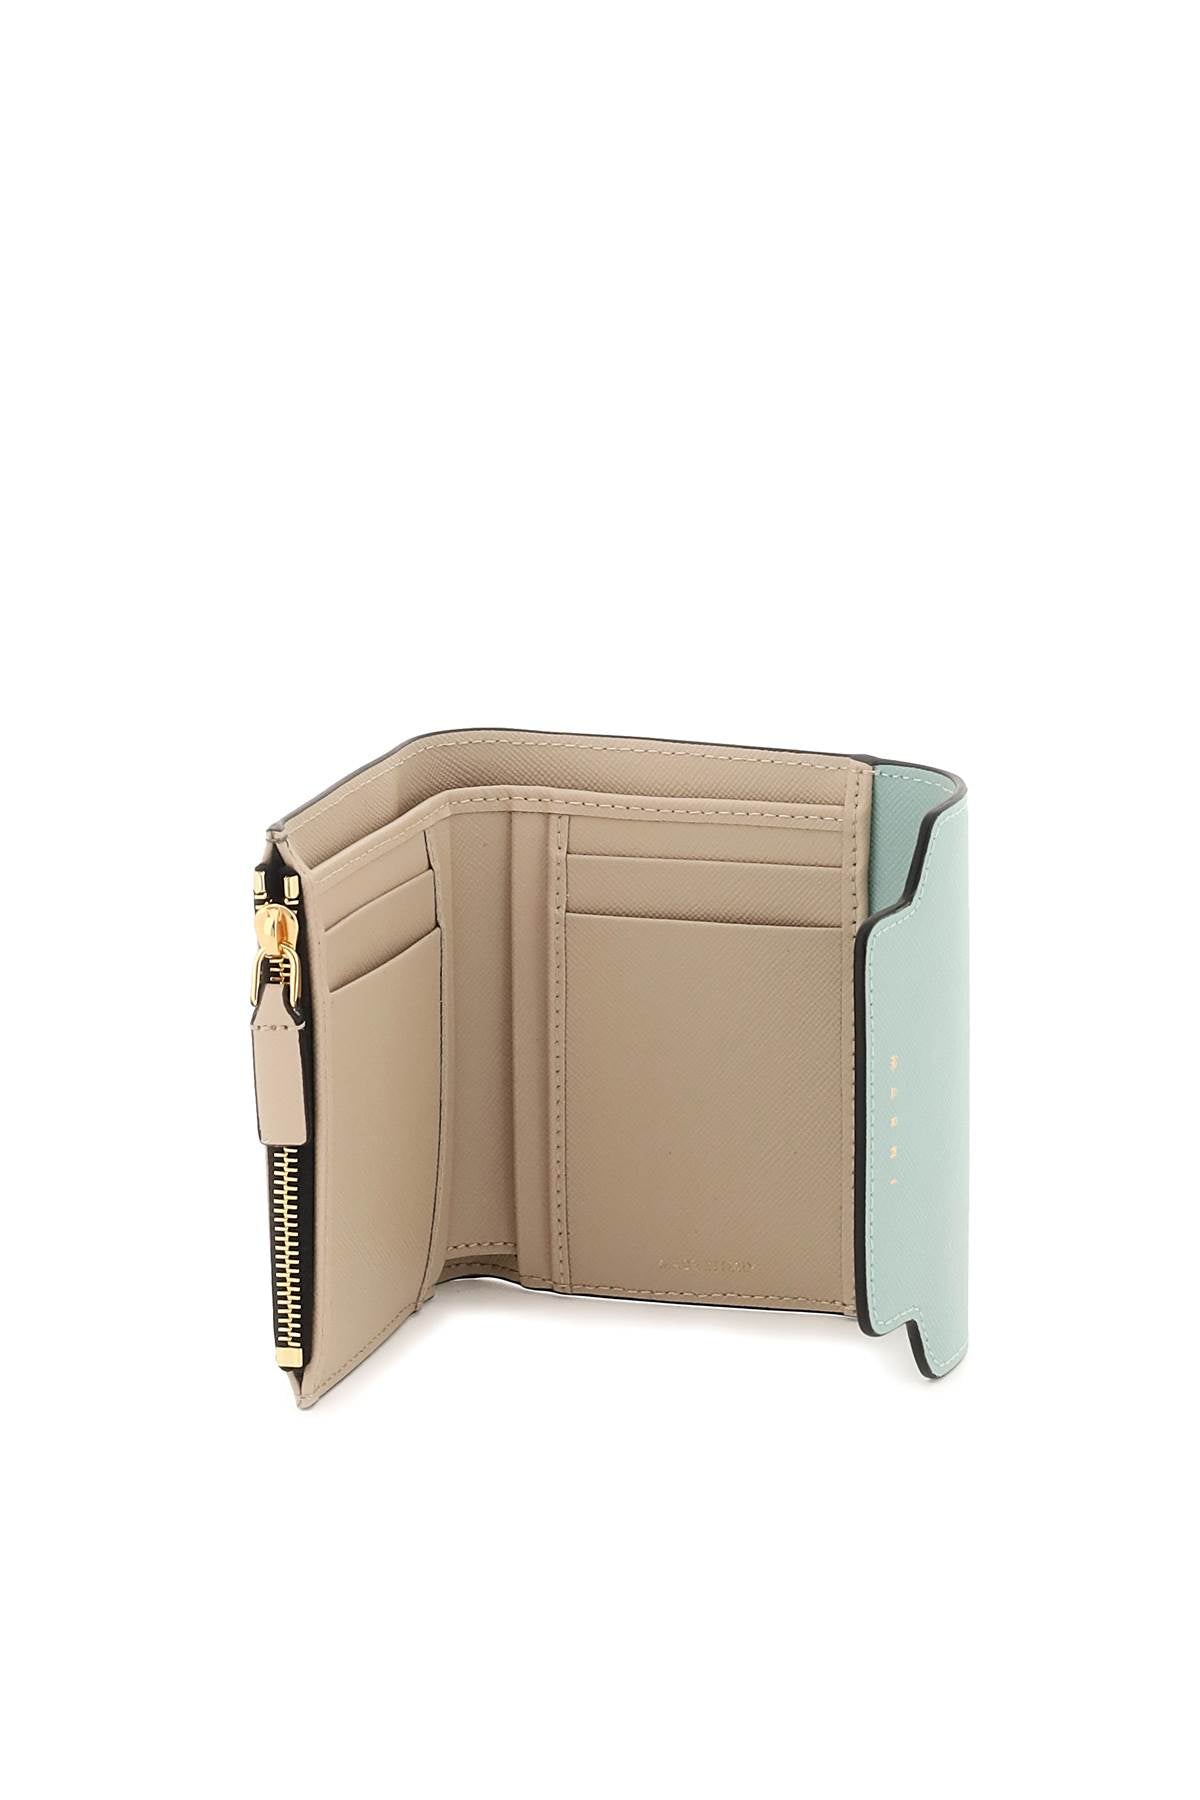 Marni bi-fold wallet with flap-1